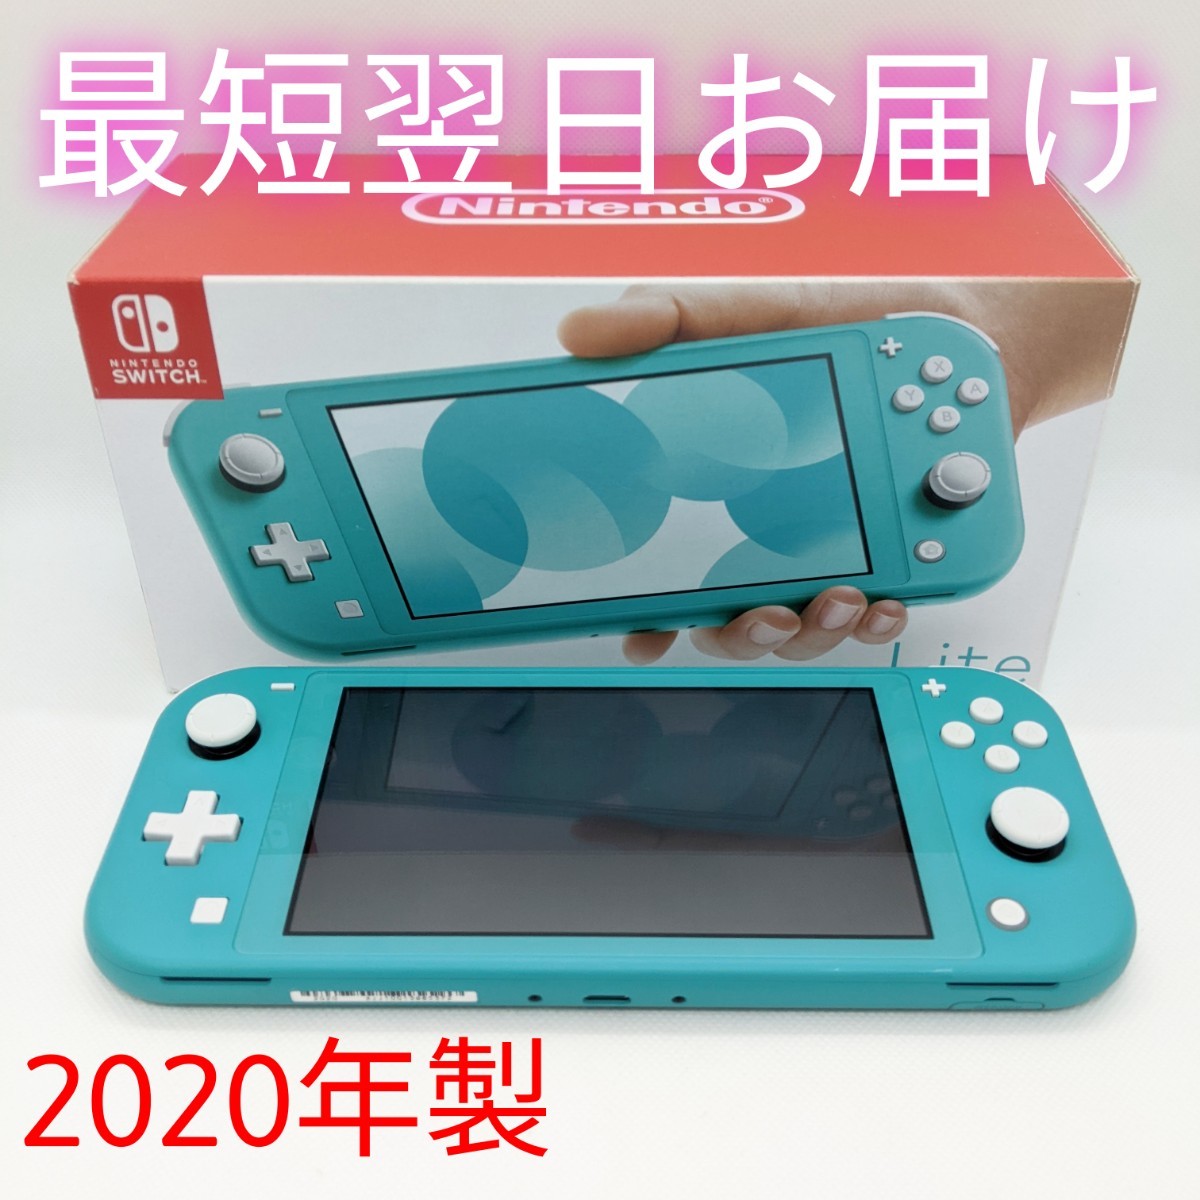 即出荷可能 Nintendo Switch Lite【保証書付き】 家庭用ゲーム本体